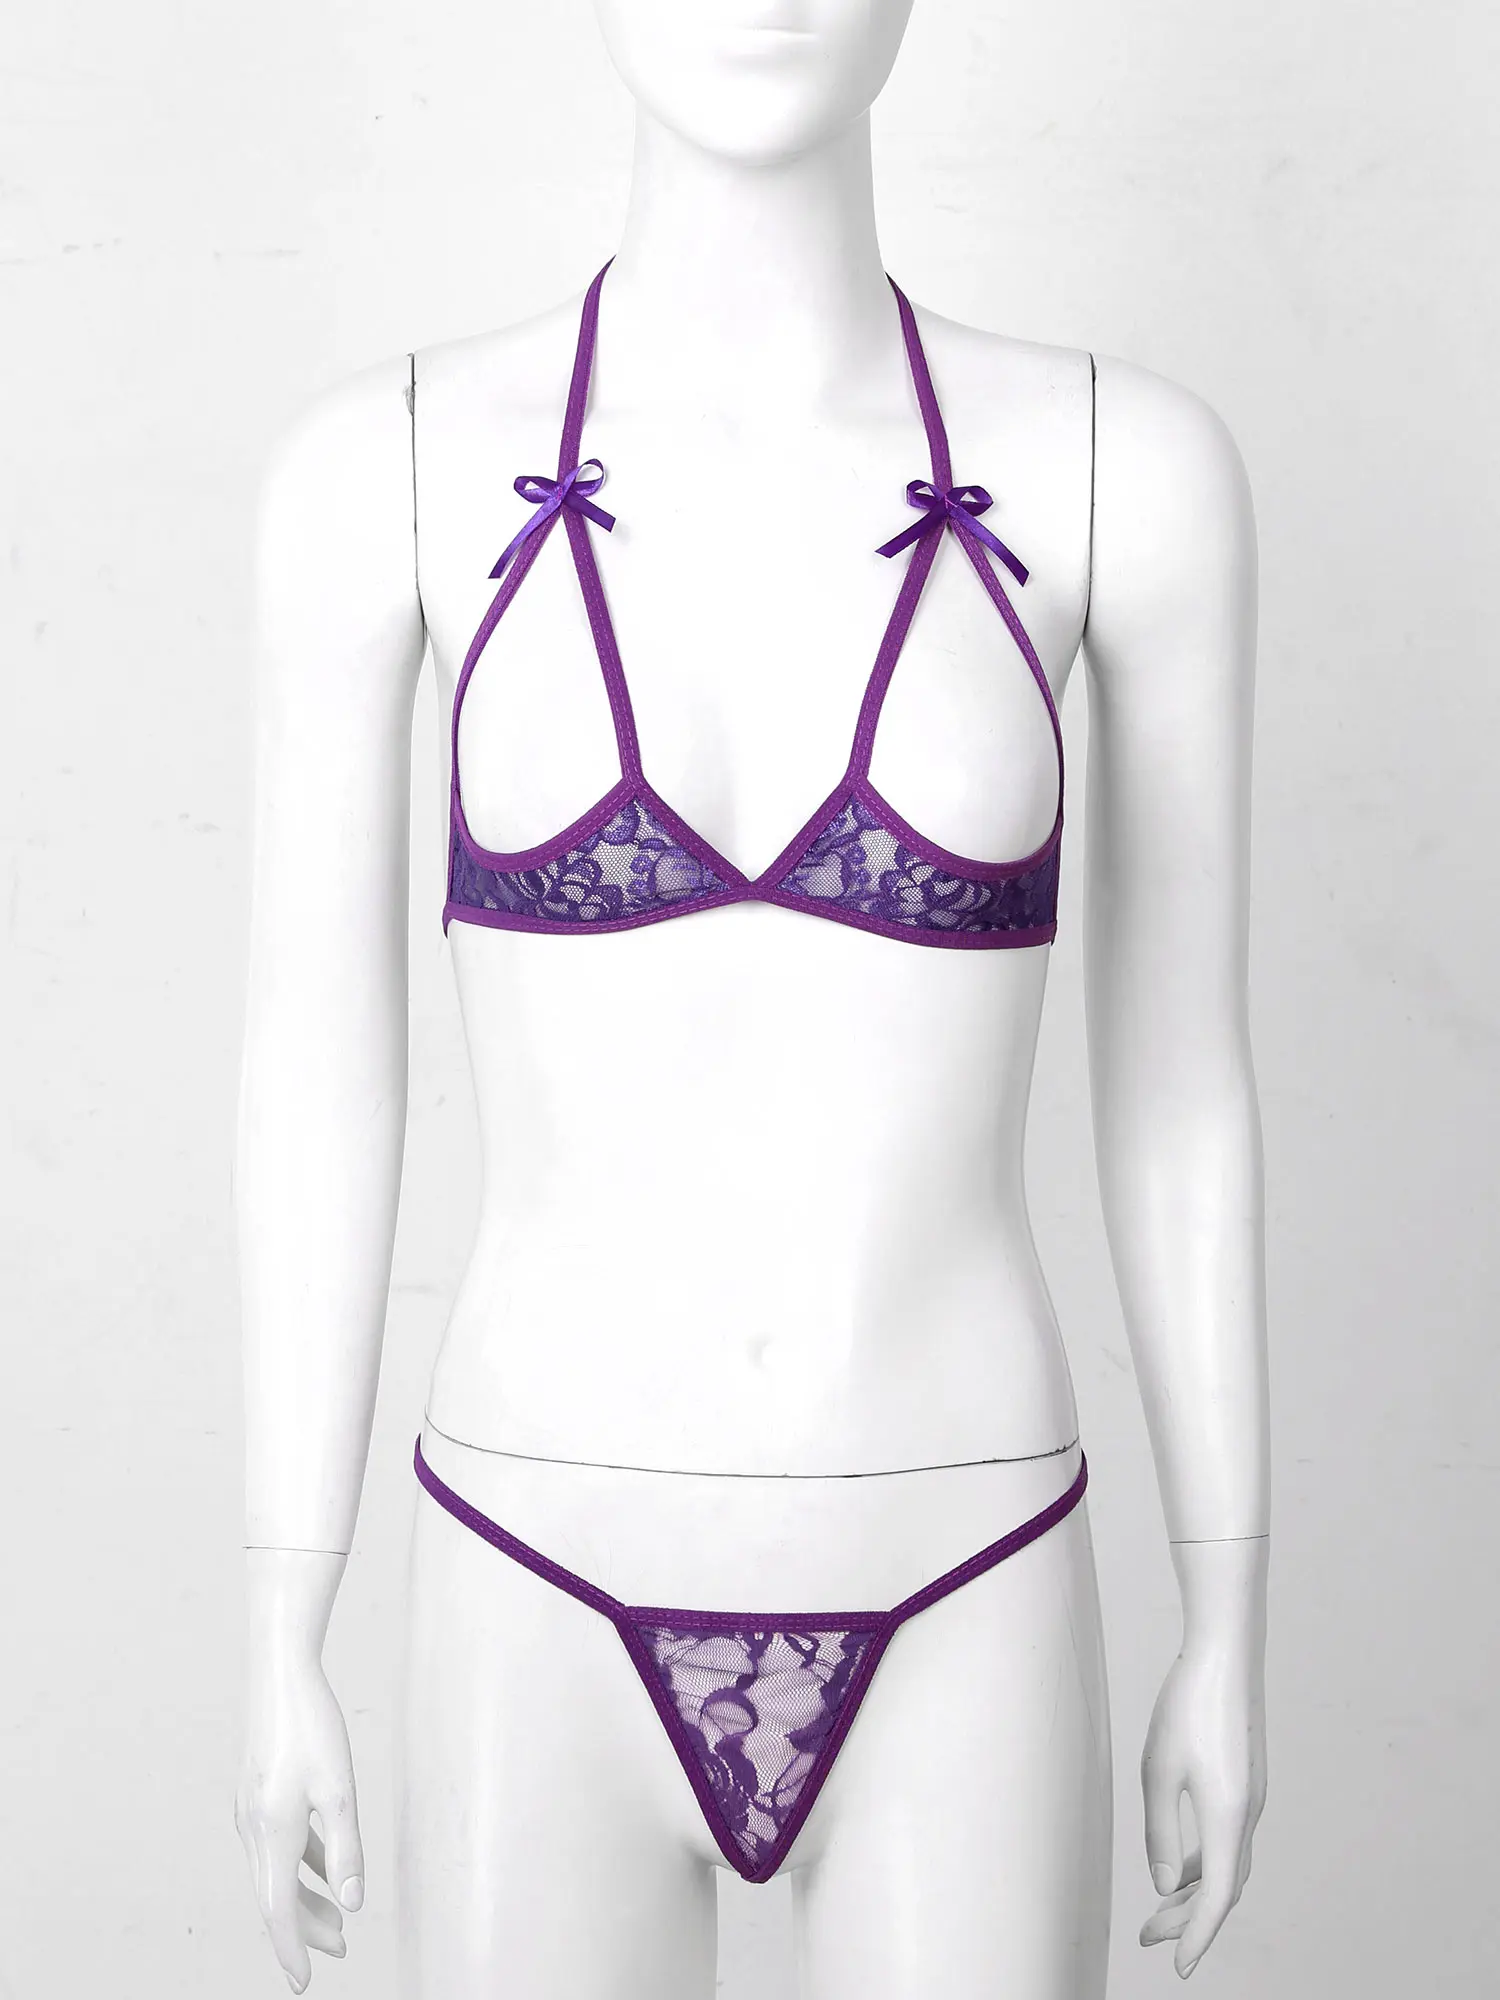 https://ae01.alicdn.com/kf/H40e3cff6889744869111375c05a96b5b8/Women-Bikini-Set-Nightwear-Open-Cup-Halter-Neck-Bra-with-G-string-Briefs-Lace-Bowknot-Lingerie.jpg